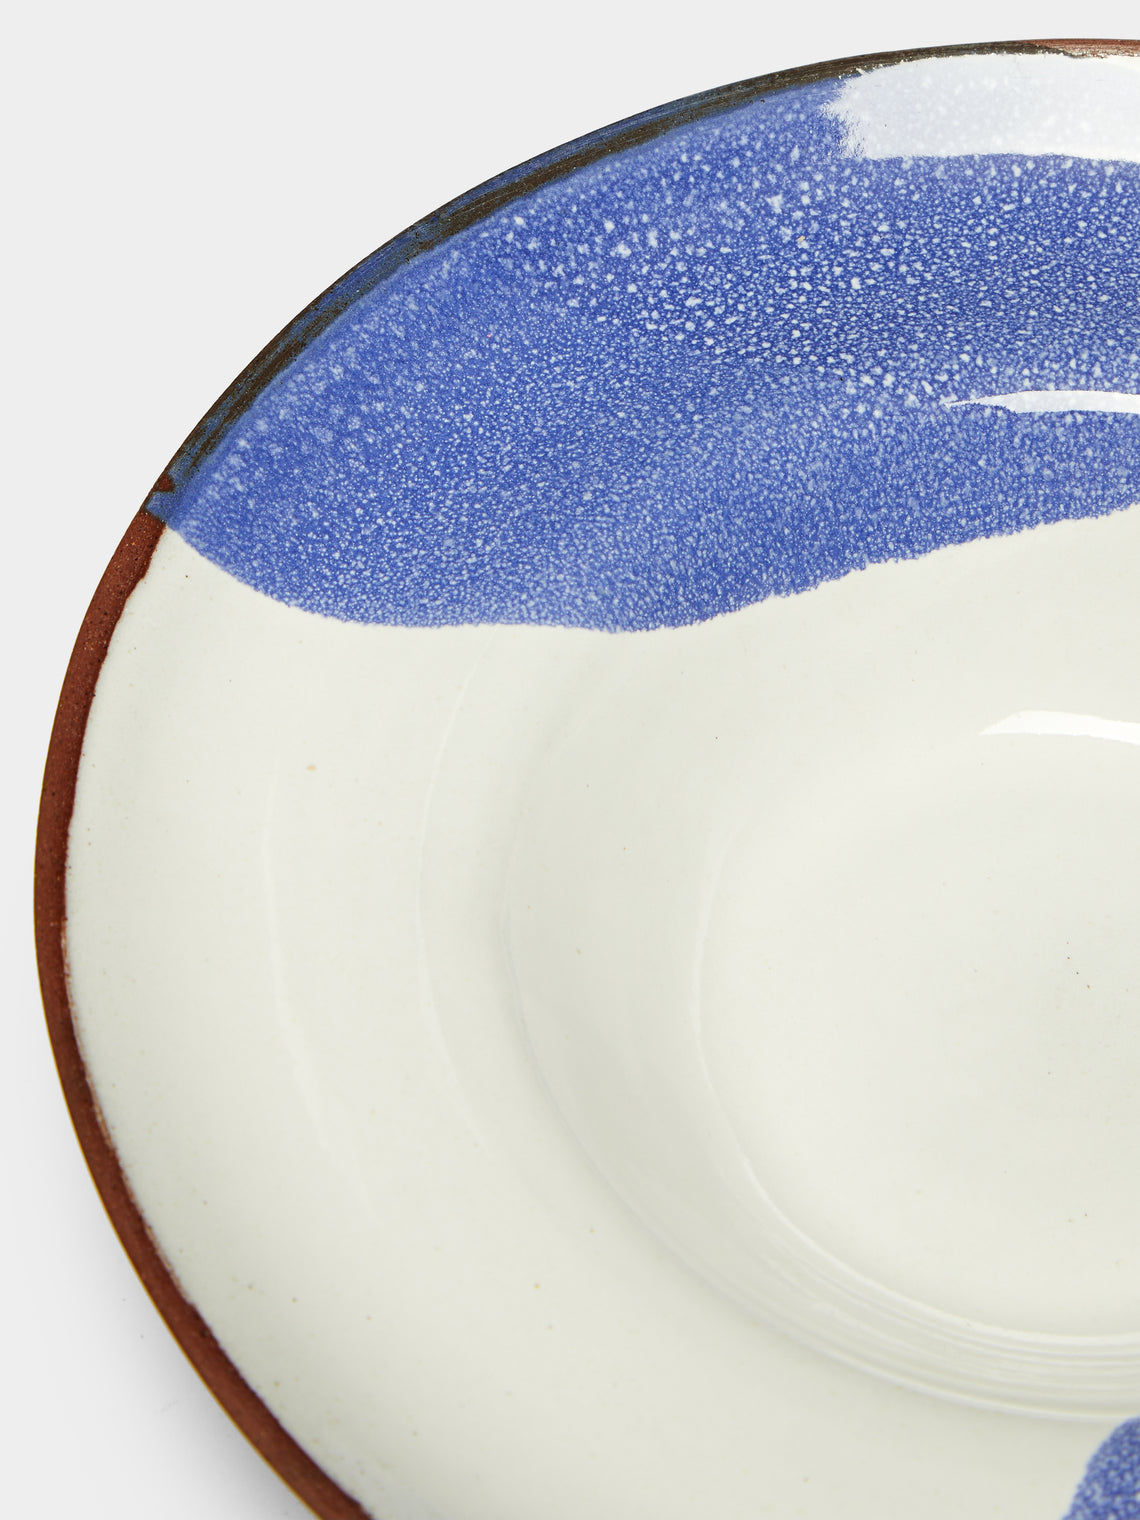 Silvia K Ceramics - Hand-Glazed Terracotta Rimmed Bowls (Set of 4) -  - ABASK